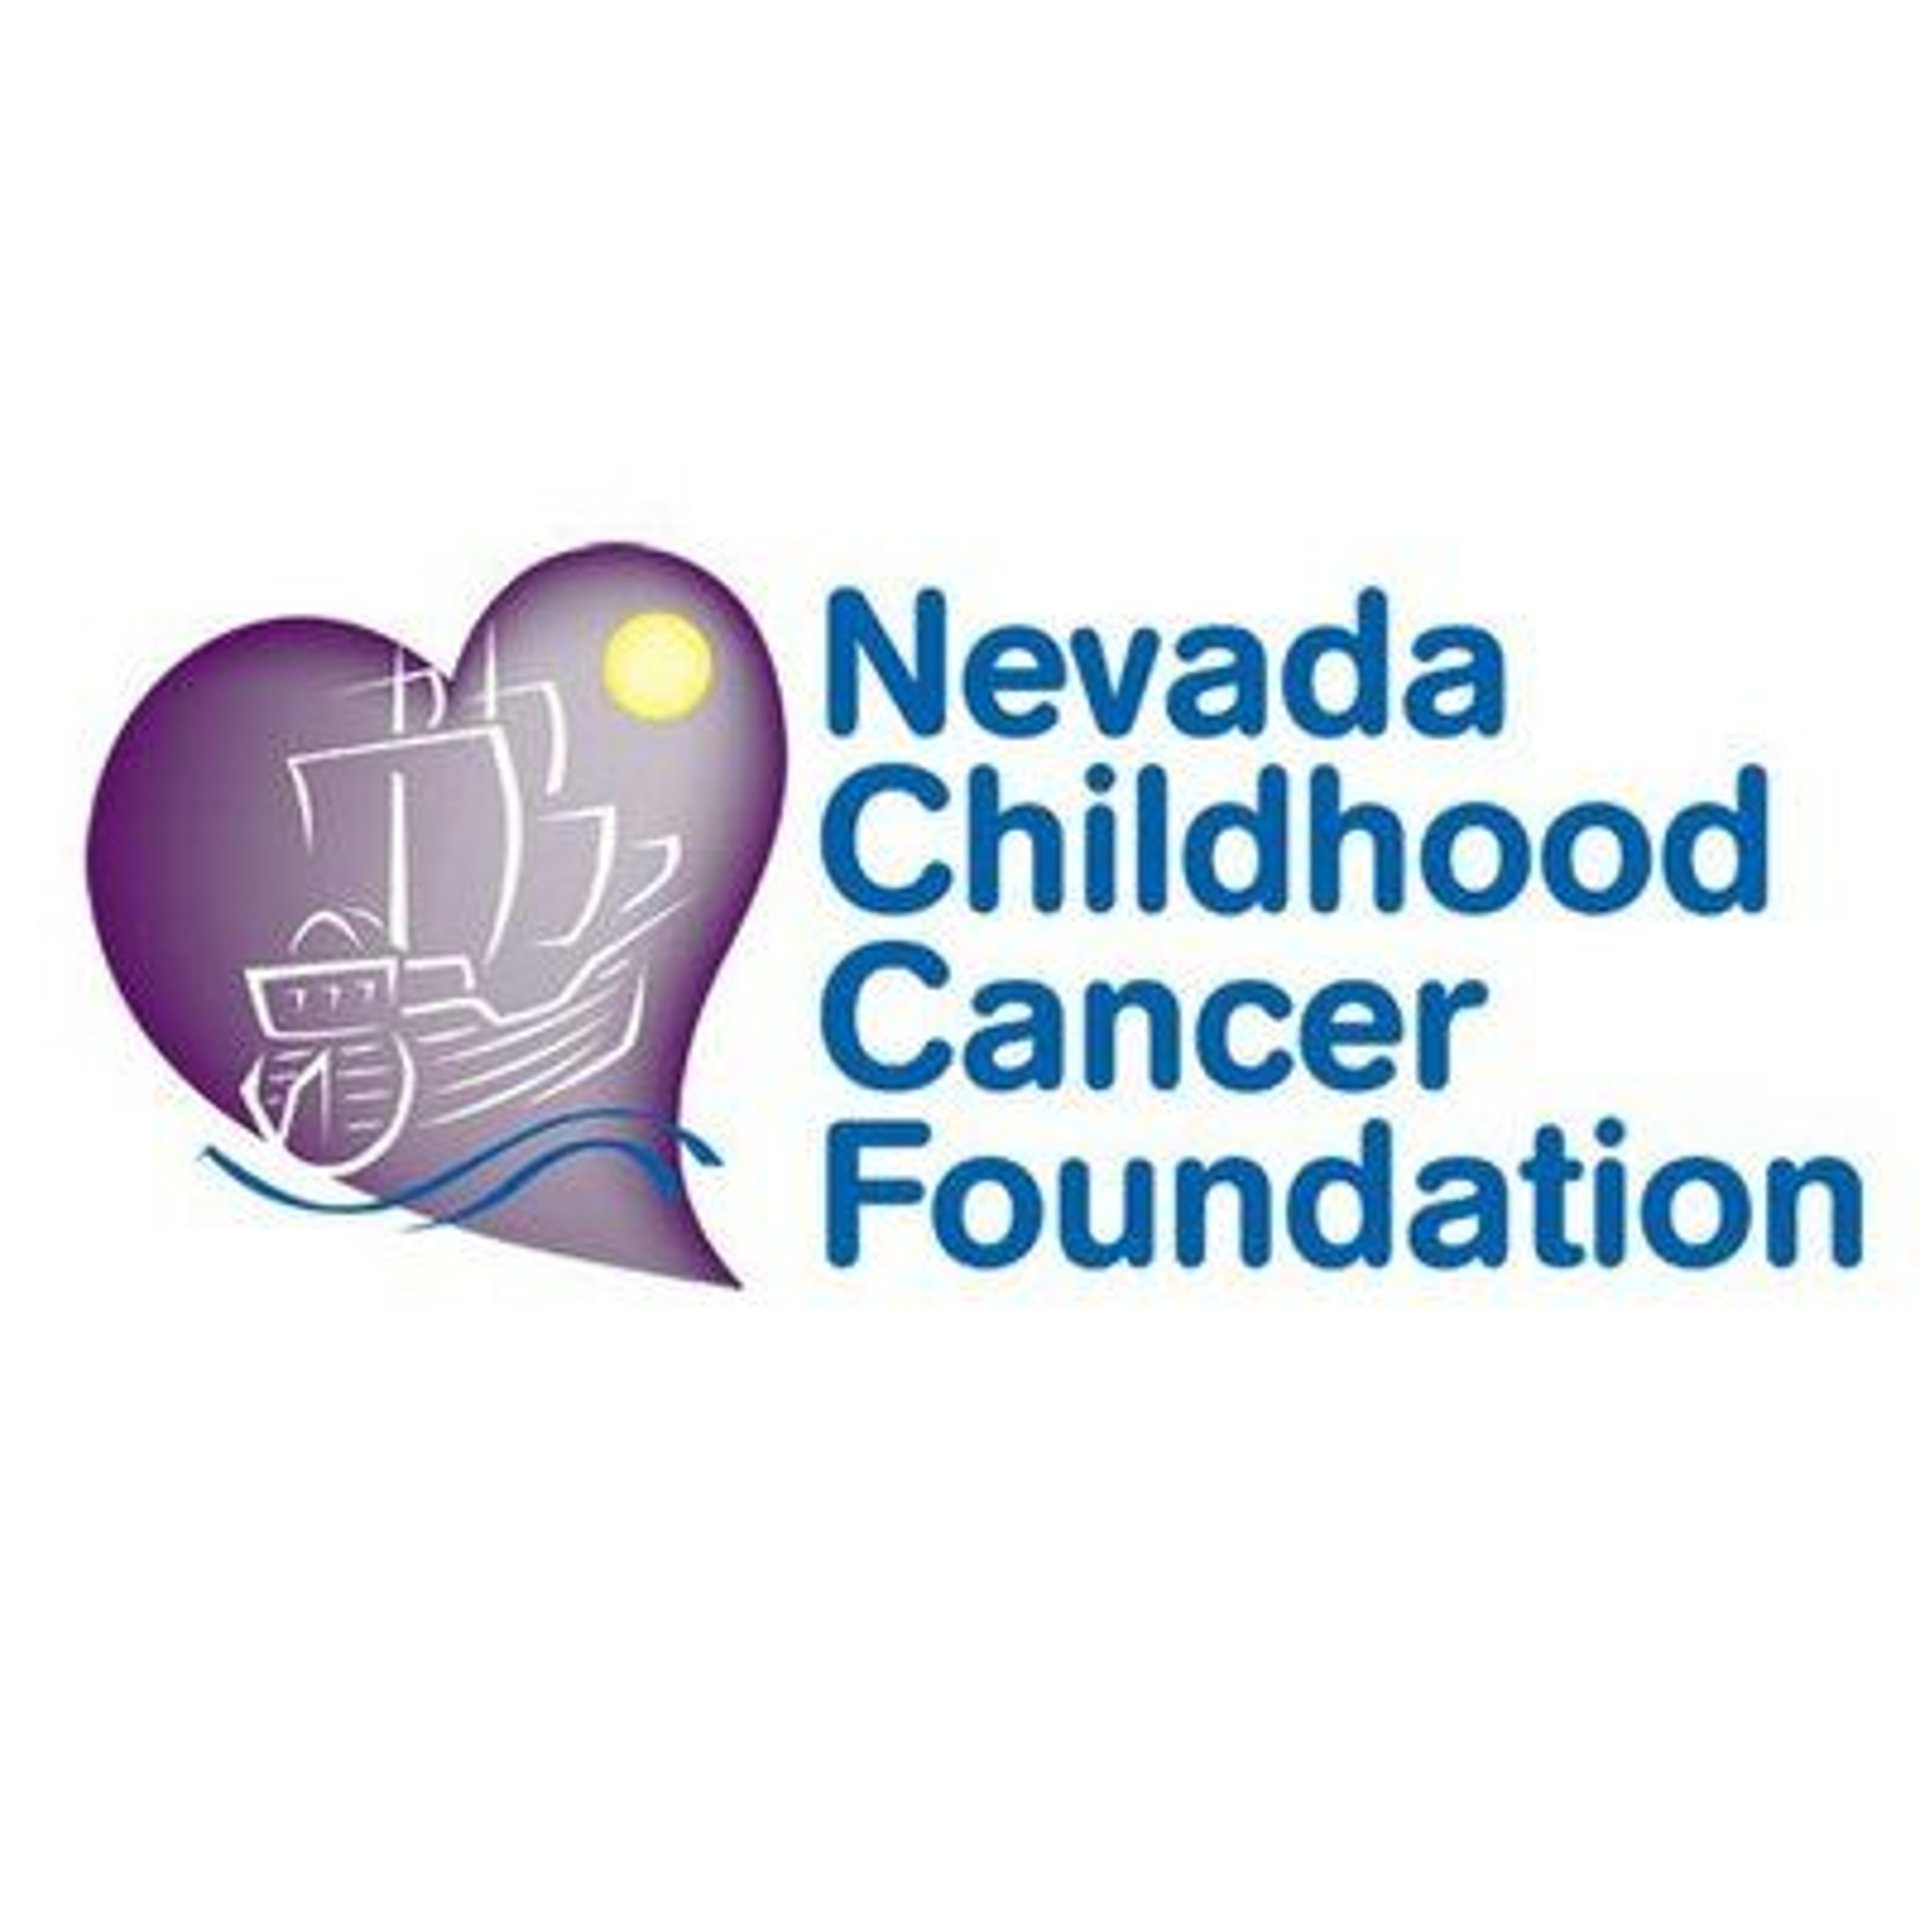 Nevada Childhood Cancer Foundation